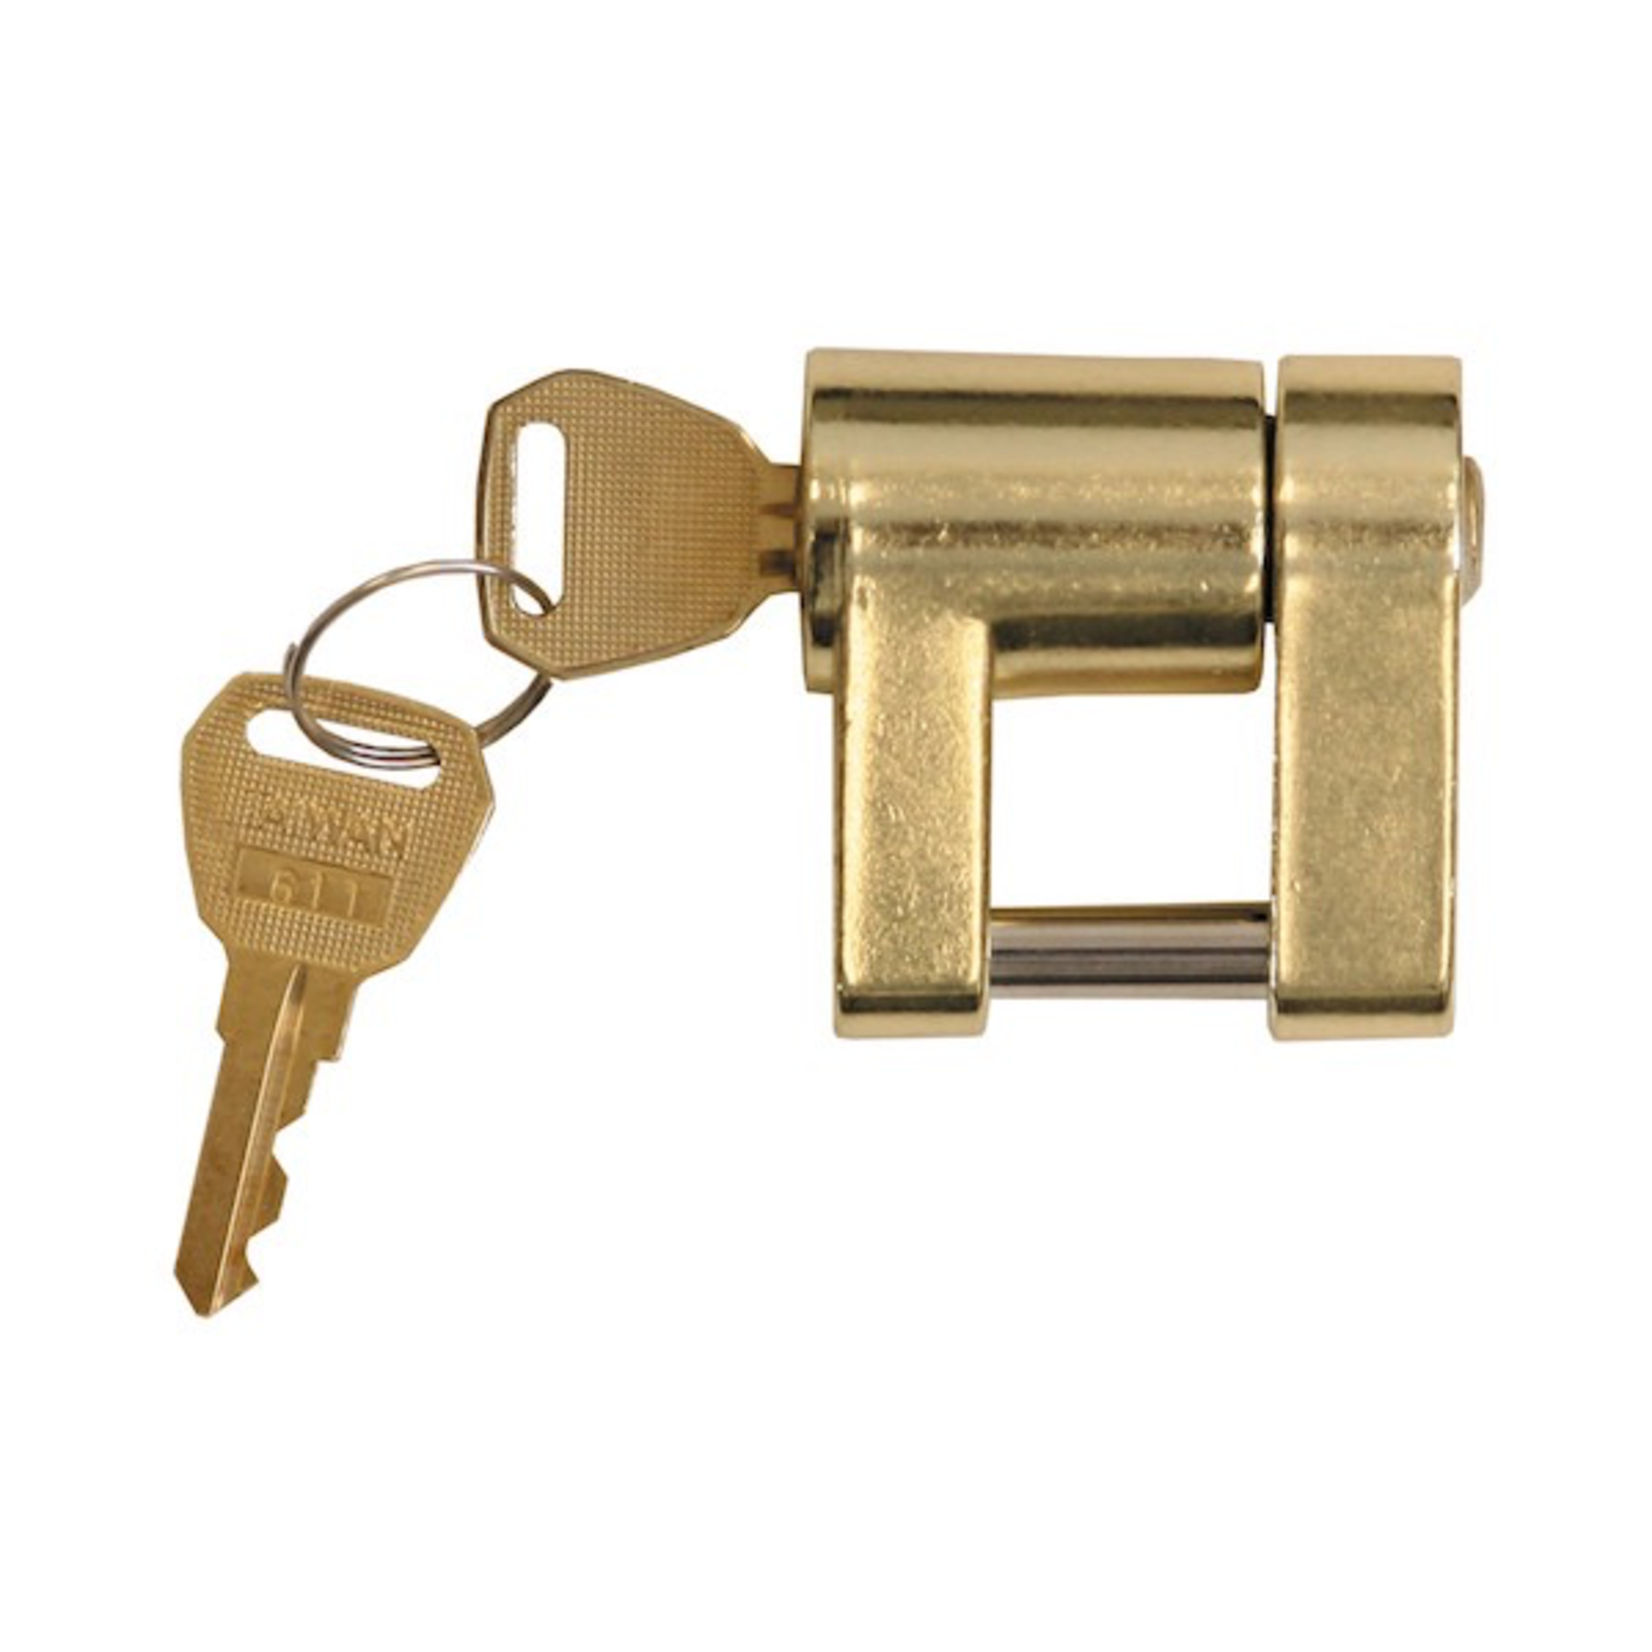 Buyers Hitch Coupler Latch Lock. 1/4" Diameter Pin x 3/4" Opening, 2 Keys